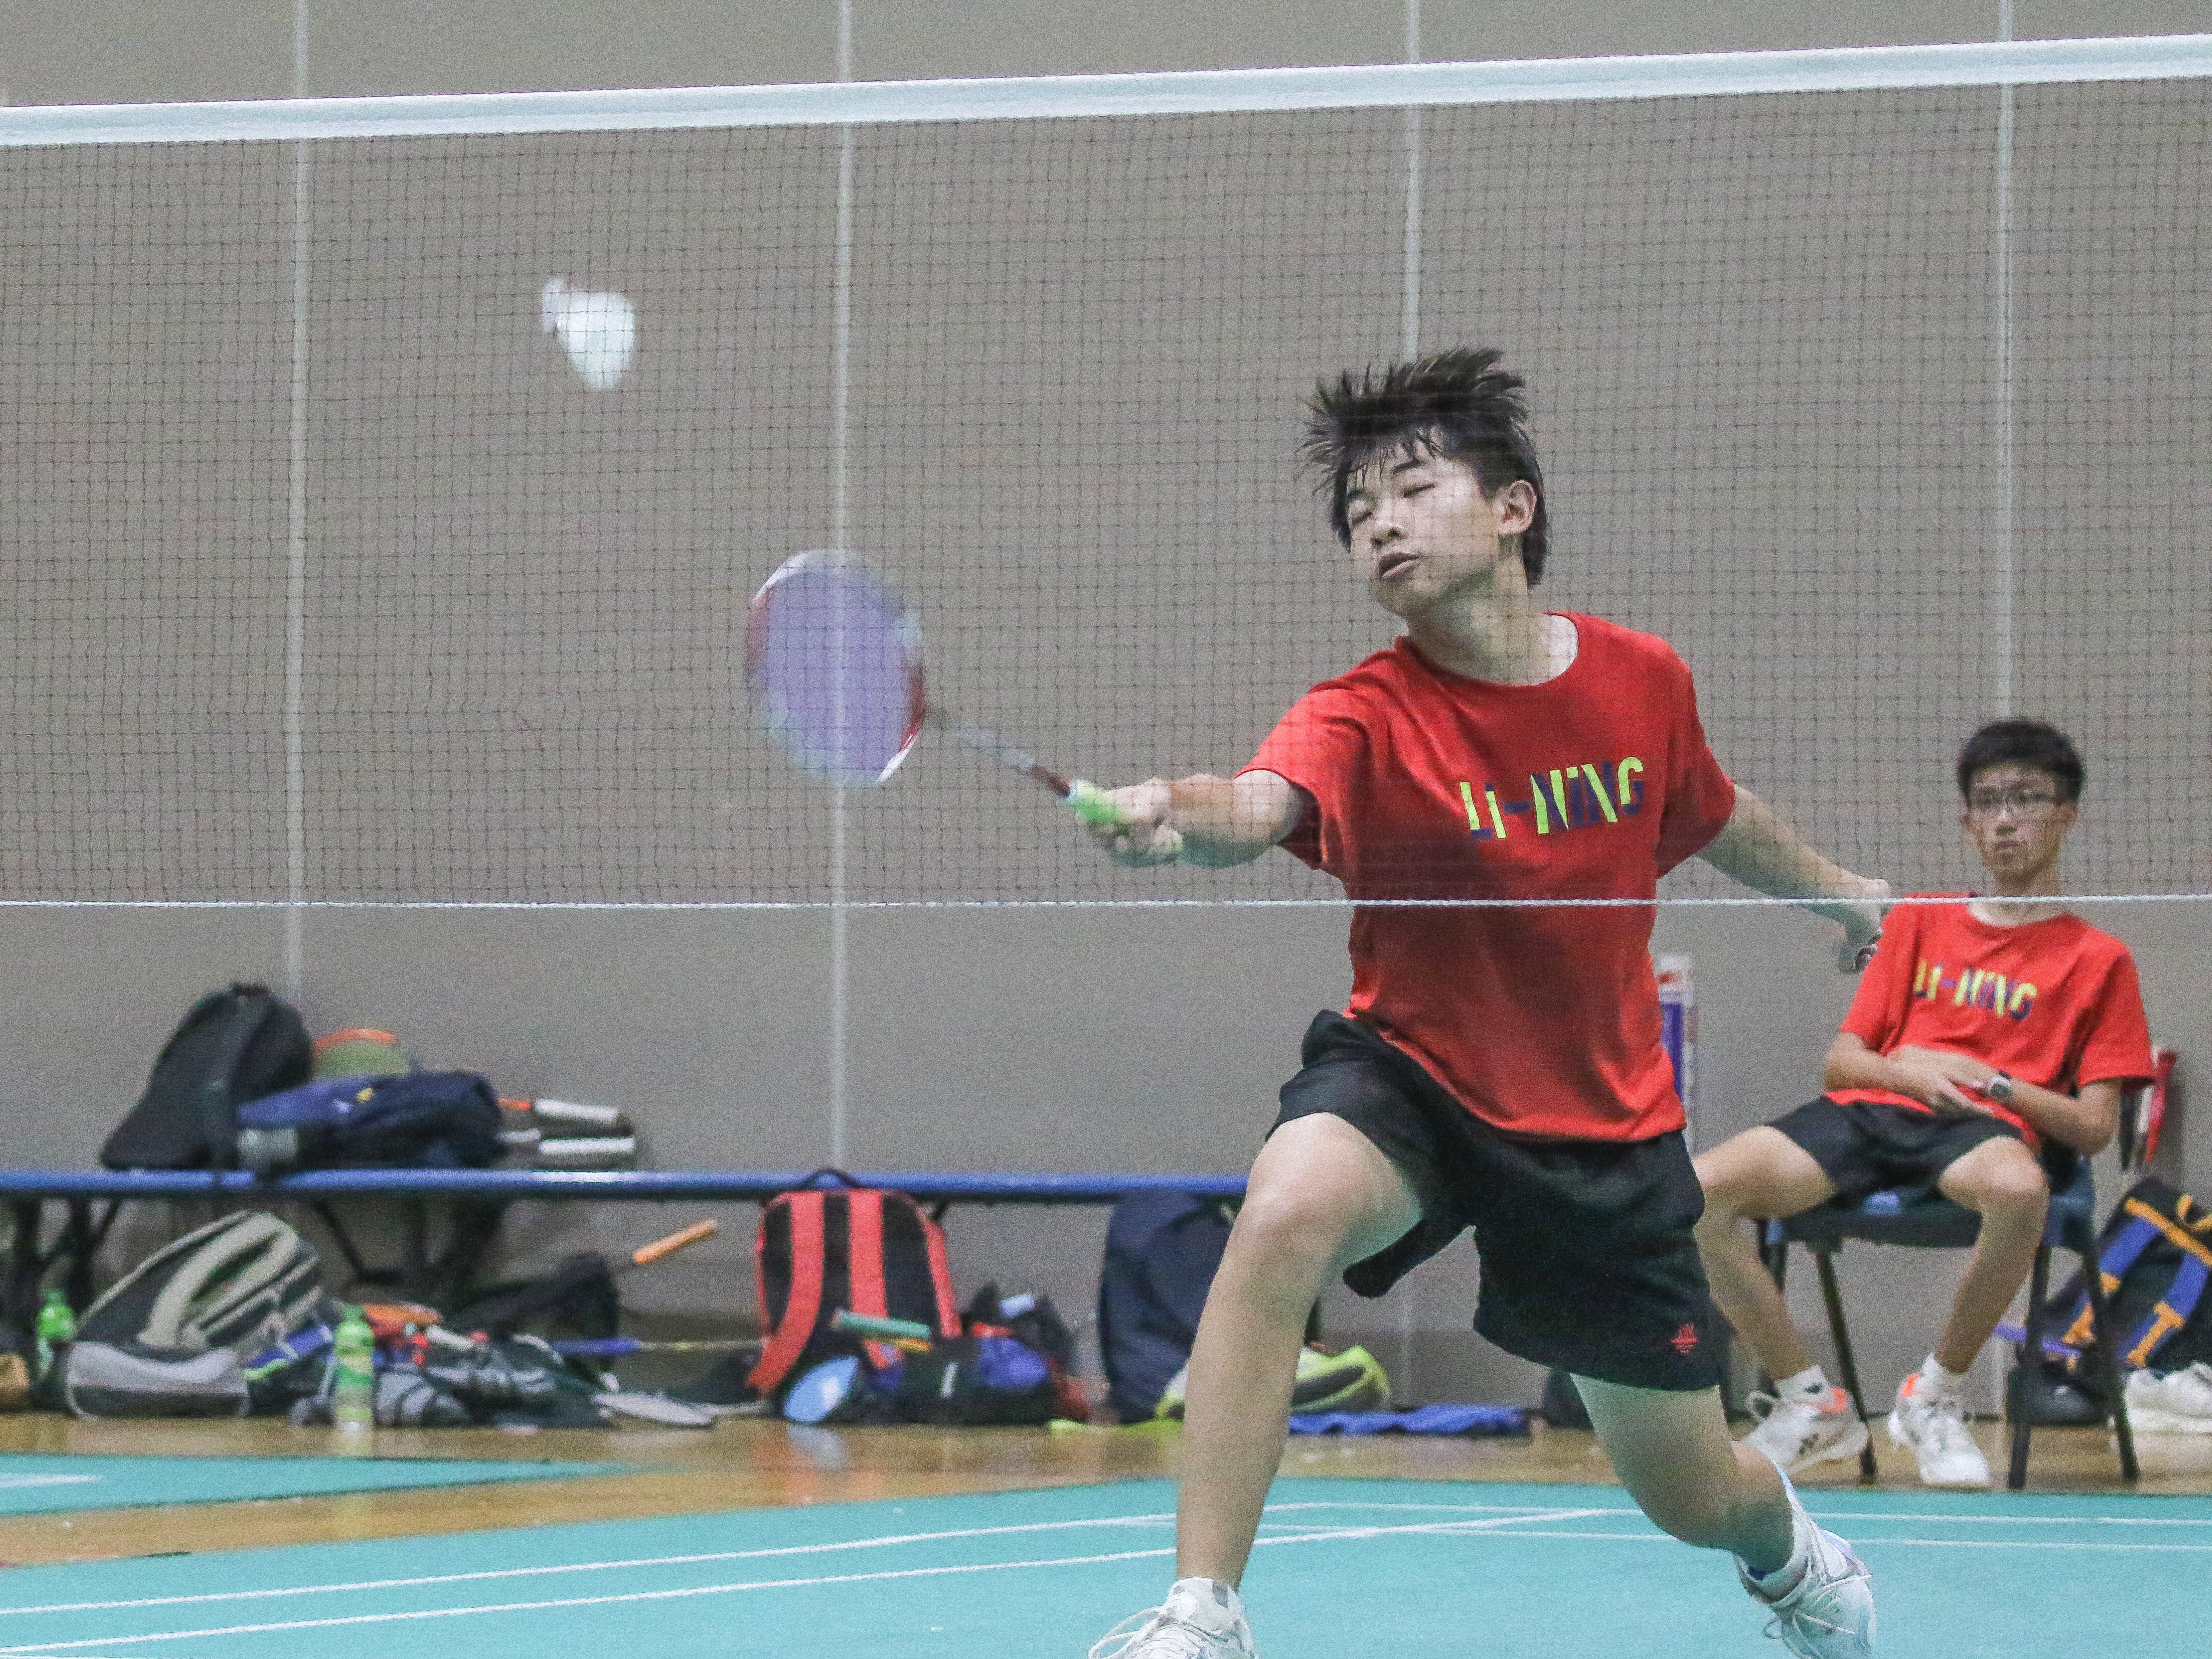 2023-05-17_Badminton_By Chin KK_IFP_1934_edited